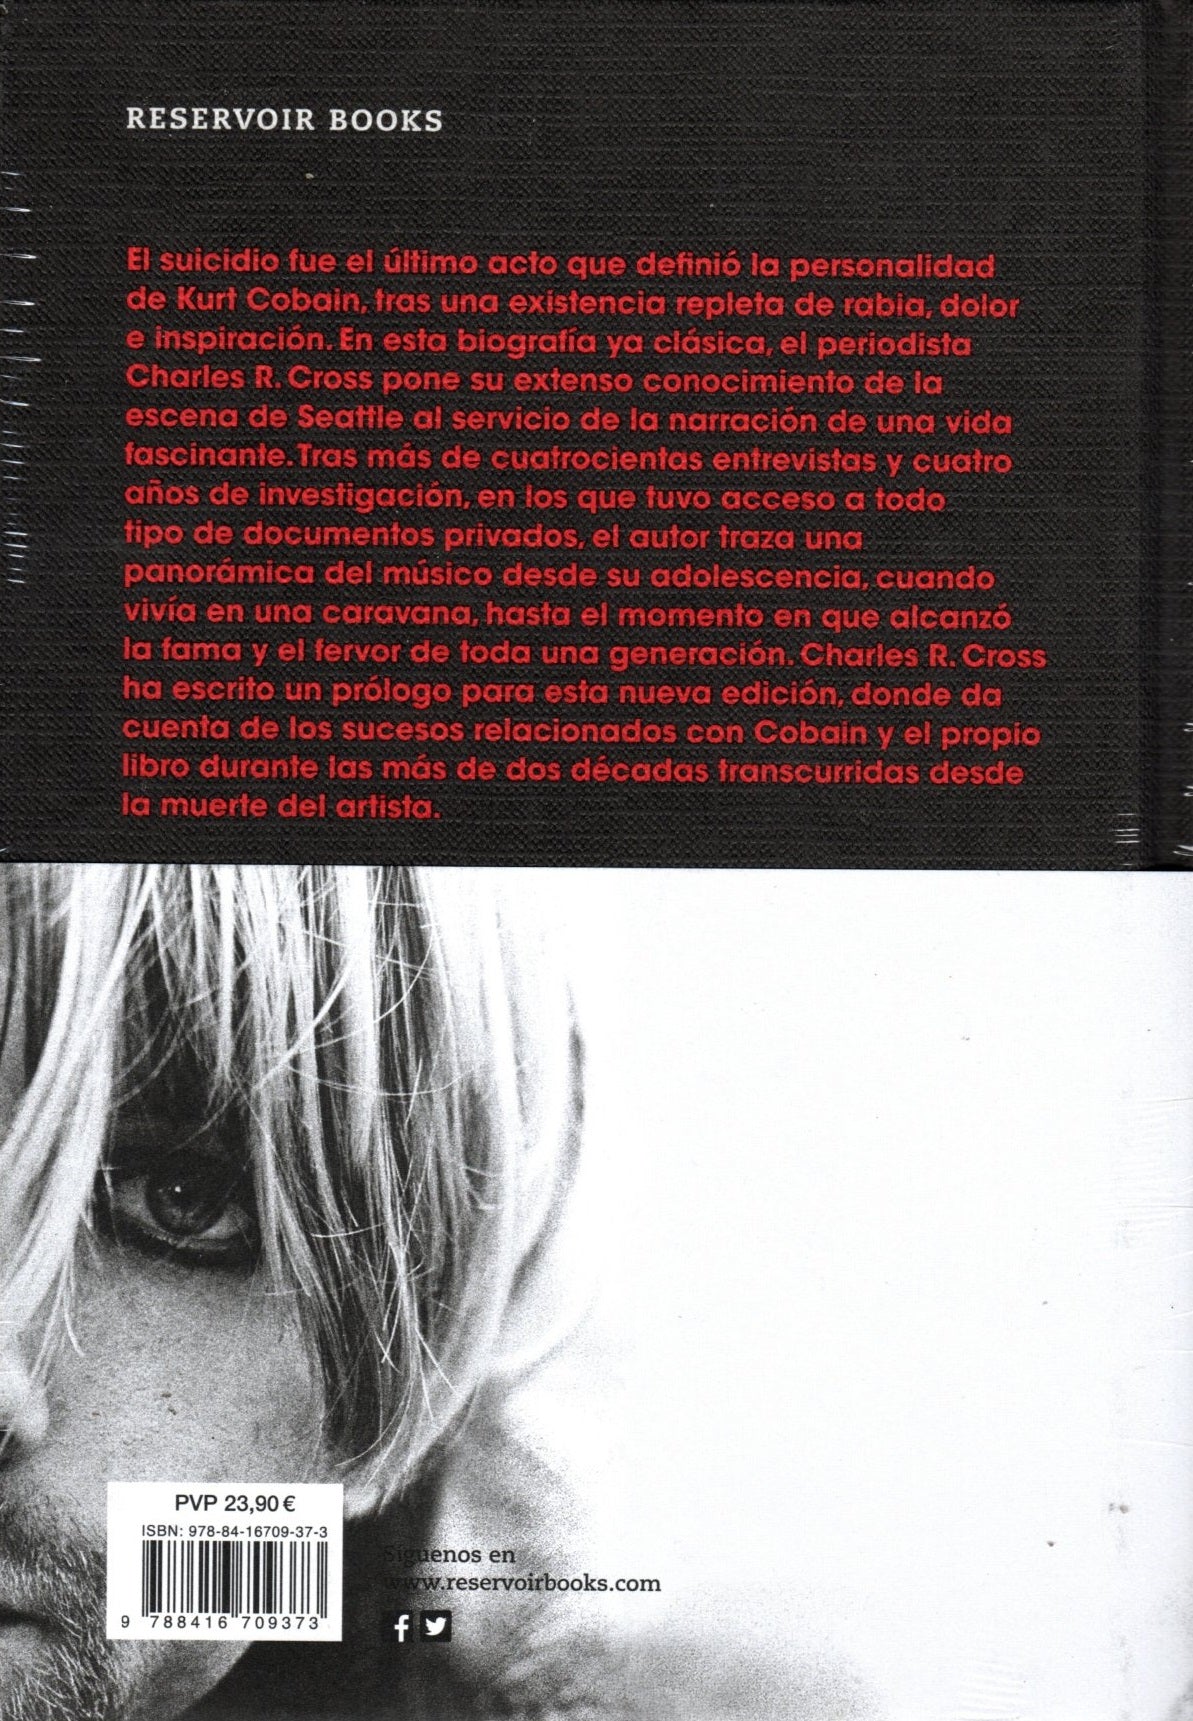 Libro  Charles R. Cross - Heavier than Heaven (Kurt Cobain: la biografía )